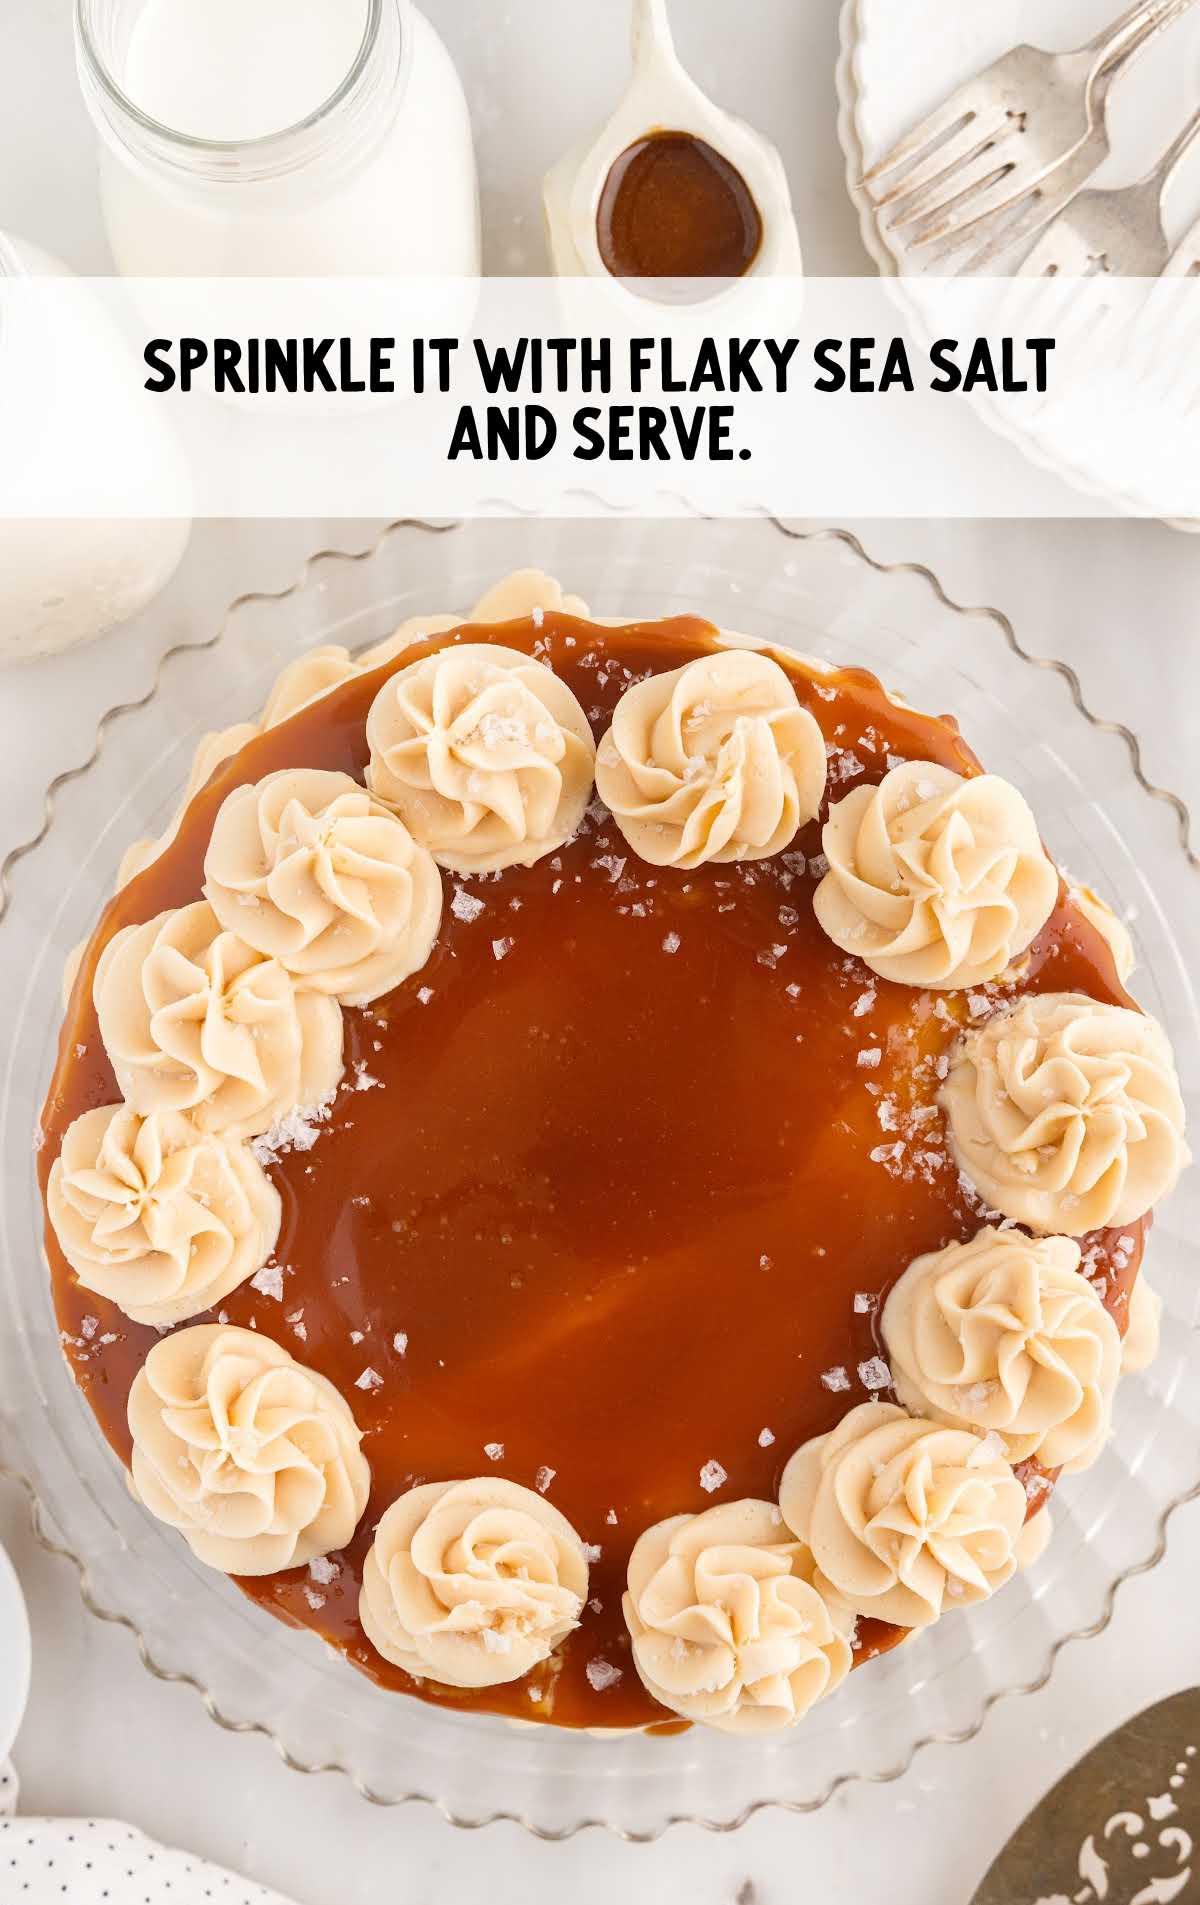 cake sprinkled with flaky sea salt on the top